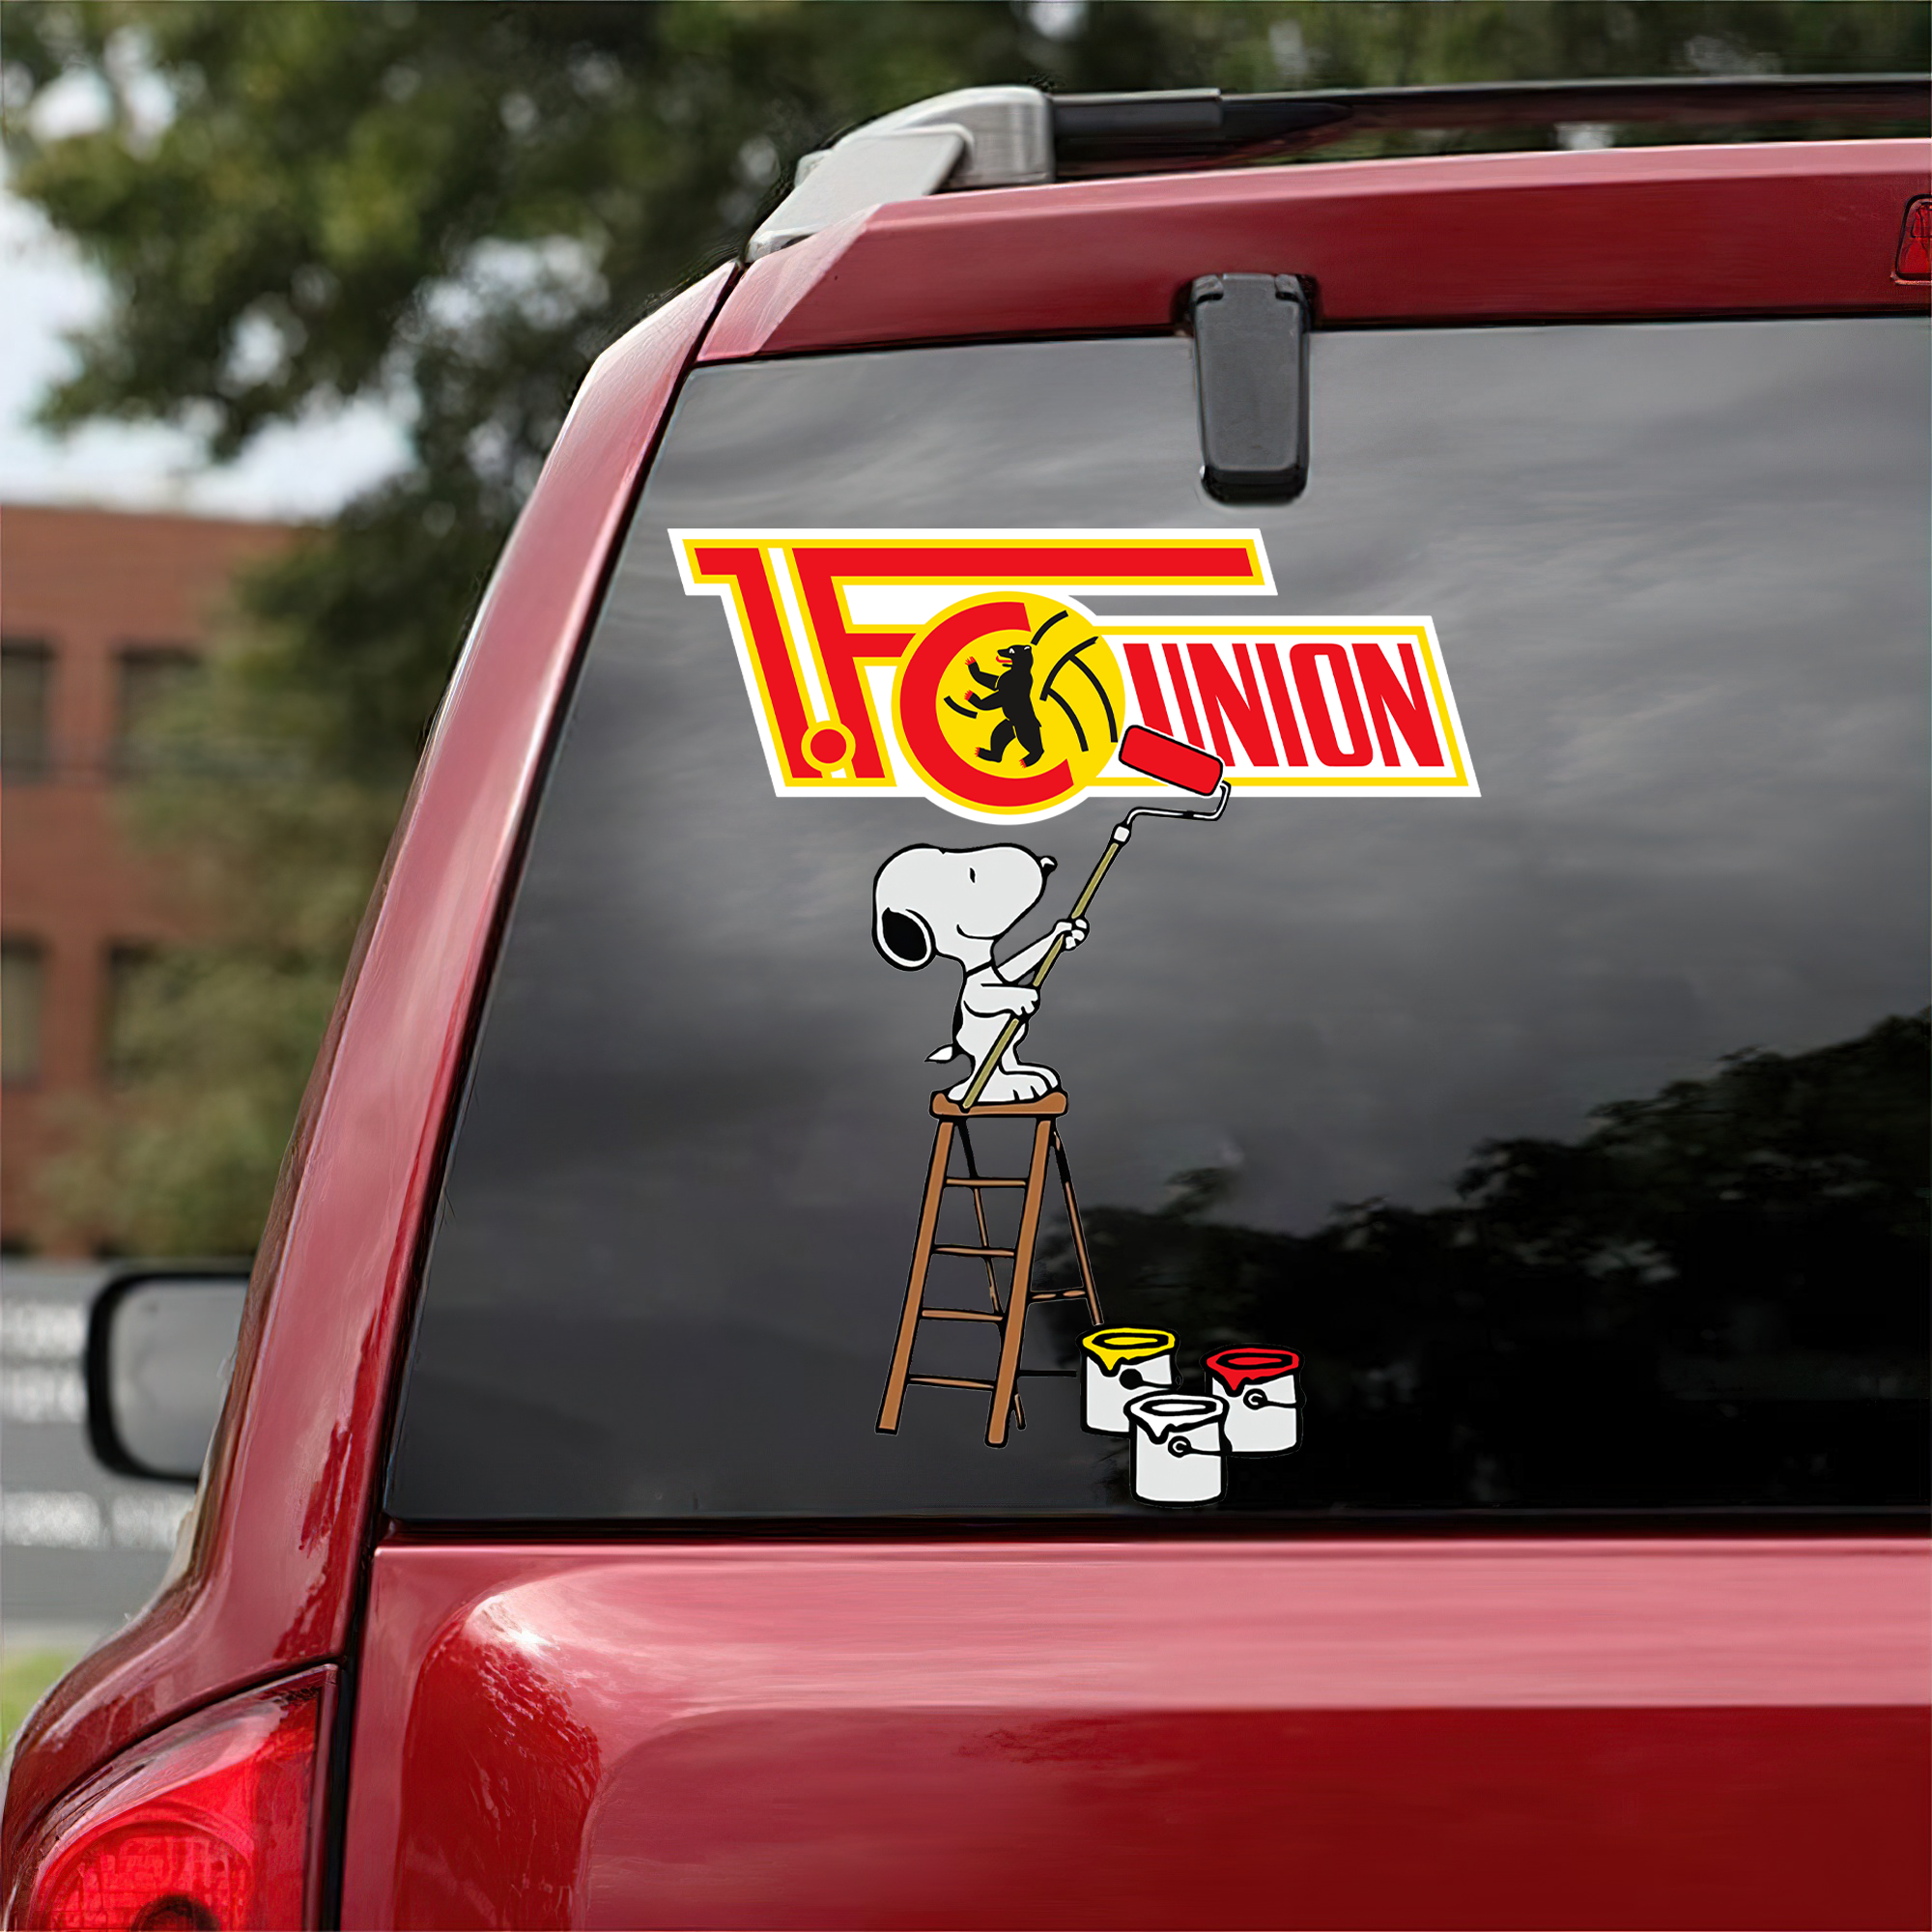 1 Fc Union BerlinMix Snoopy Car Decal Art PT54744